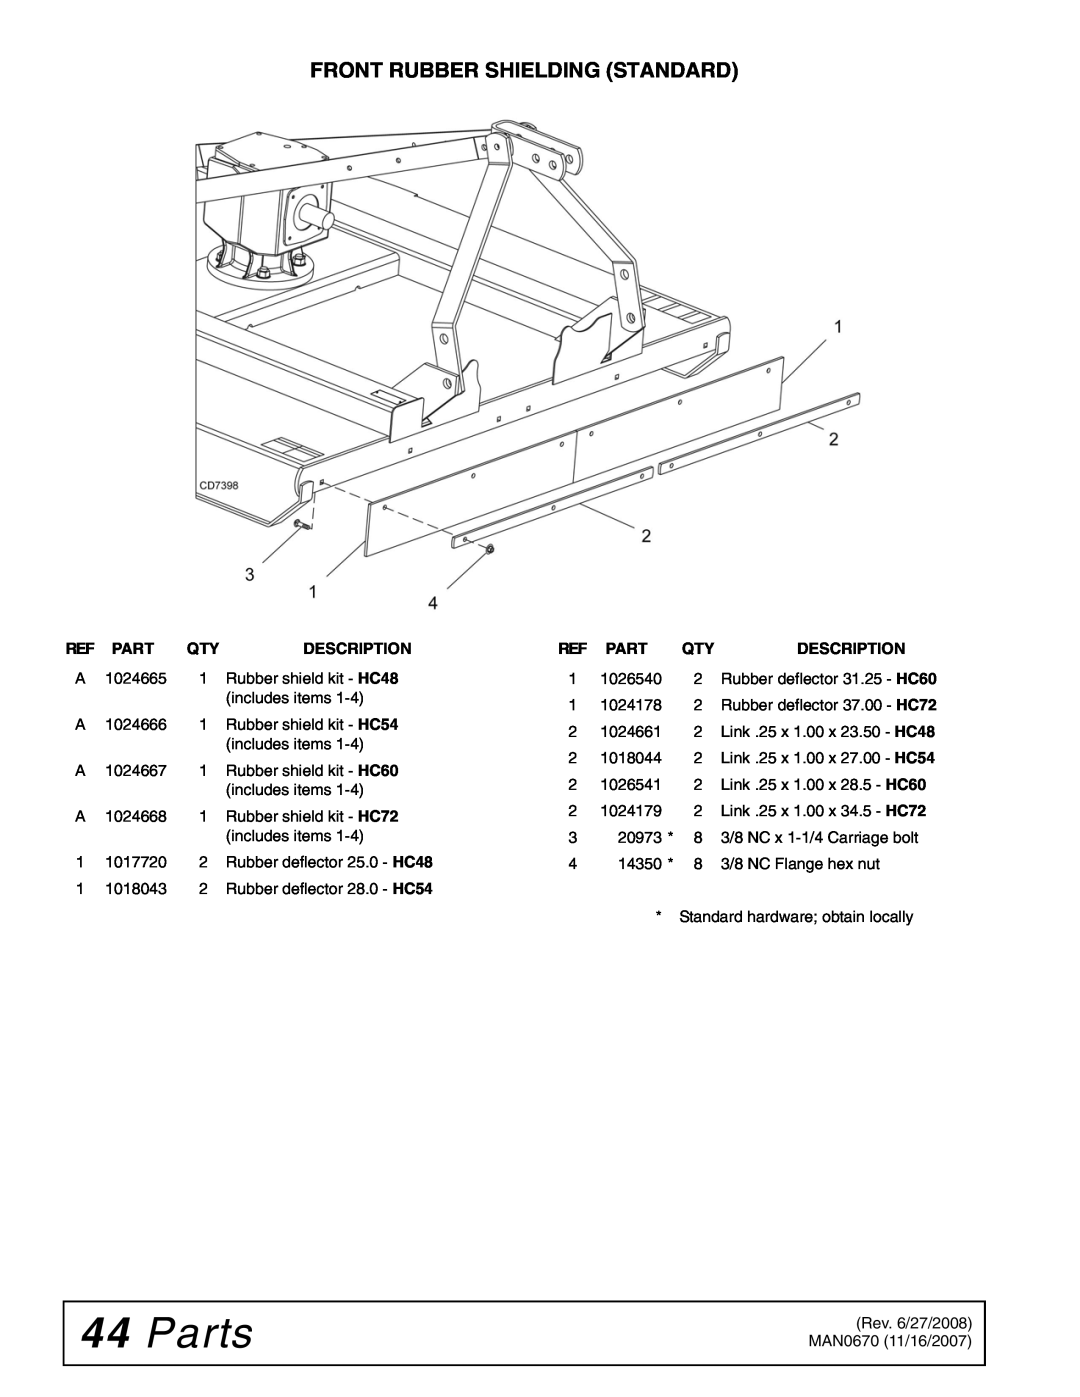 Woods Equipment HC54, HC48, HC72, HC60 manual 44Parts, Front Rubber Shielding Standard 